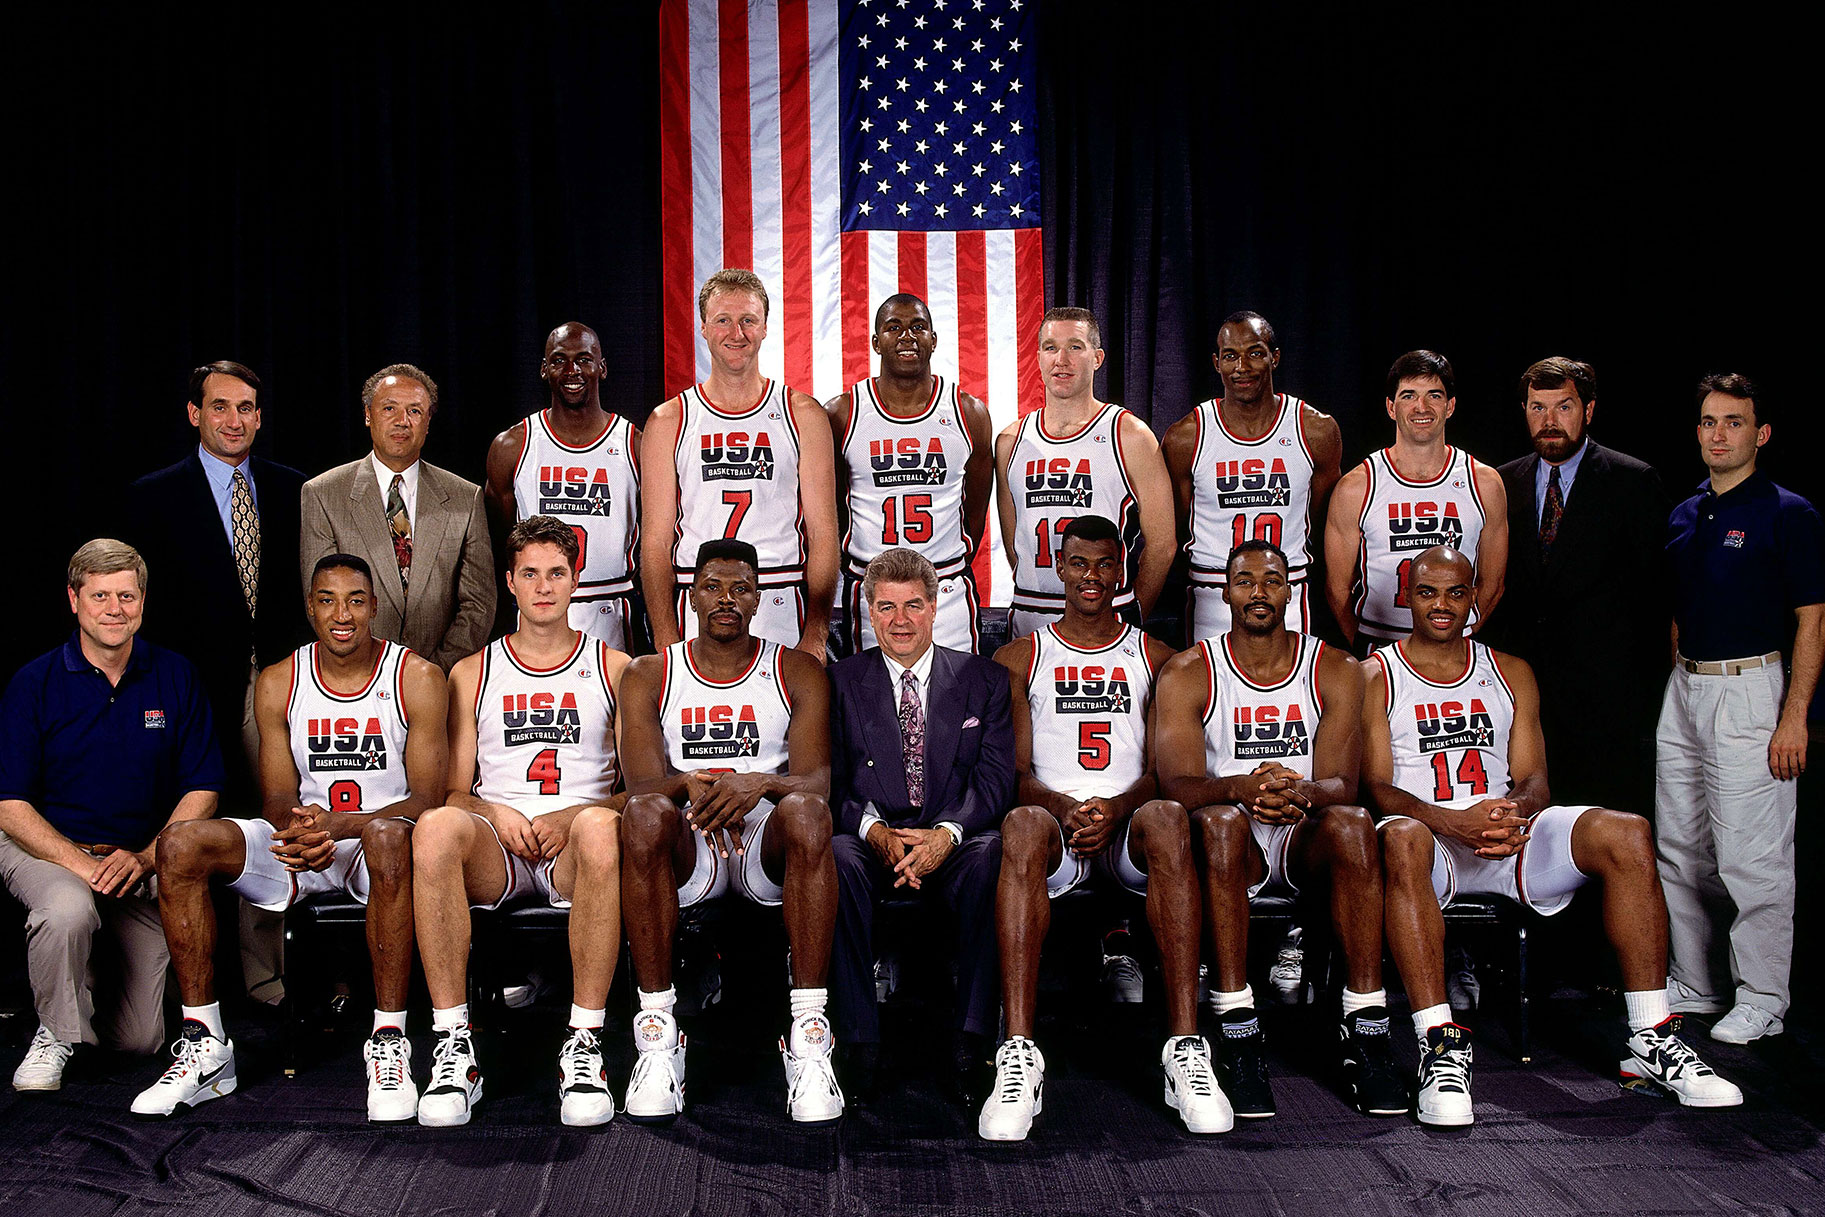 The 1992 USA Men's Basketball Olympic Team's portrait